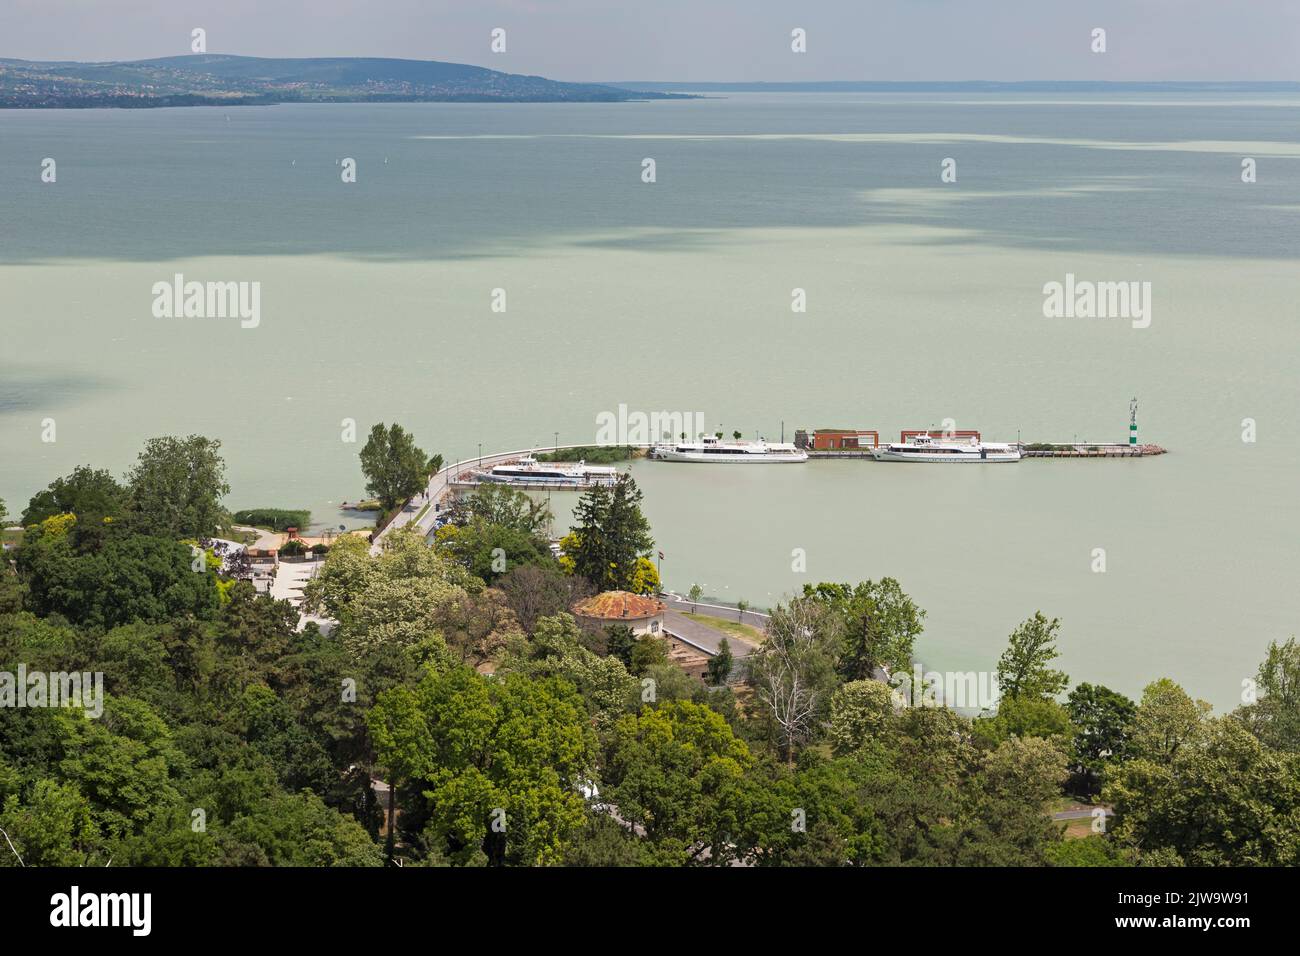 Tihany, Halbinsel Tihany, Ungarn. Balaton und Tihany Dorf Hafen mit Fähren vor Anker. Stockfoto